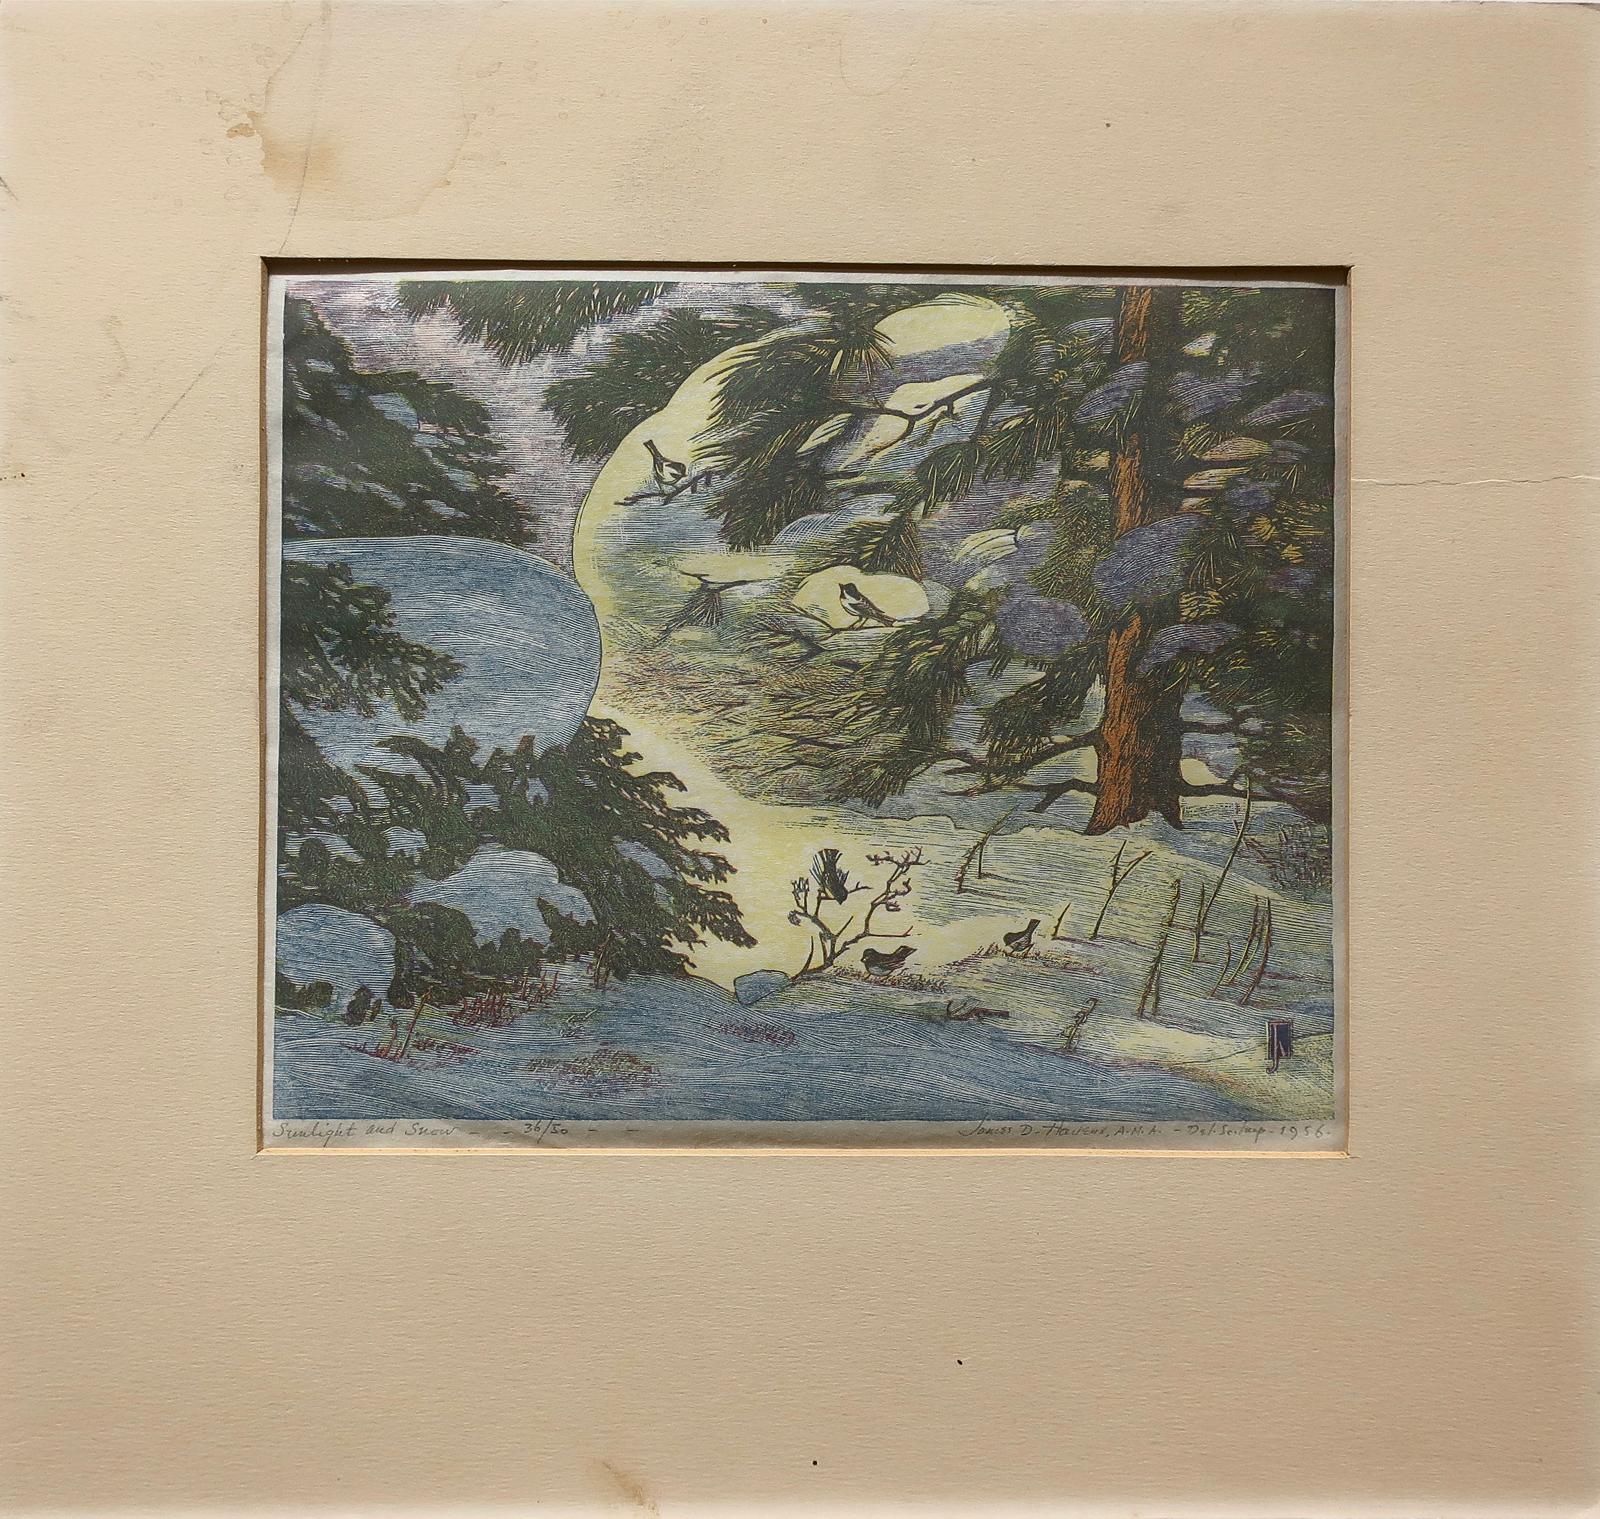 James Dexter Havens (1900-1960) - Sunlight And Snow